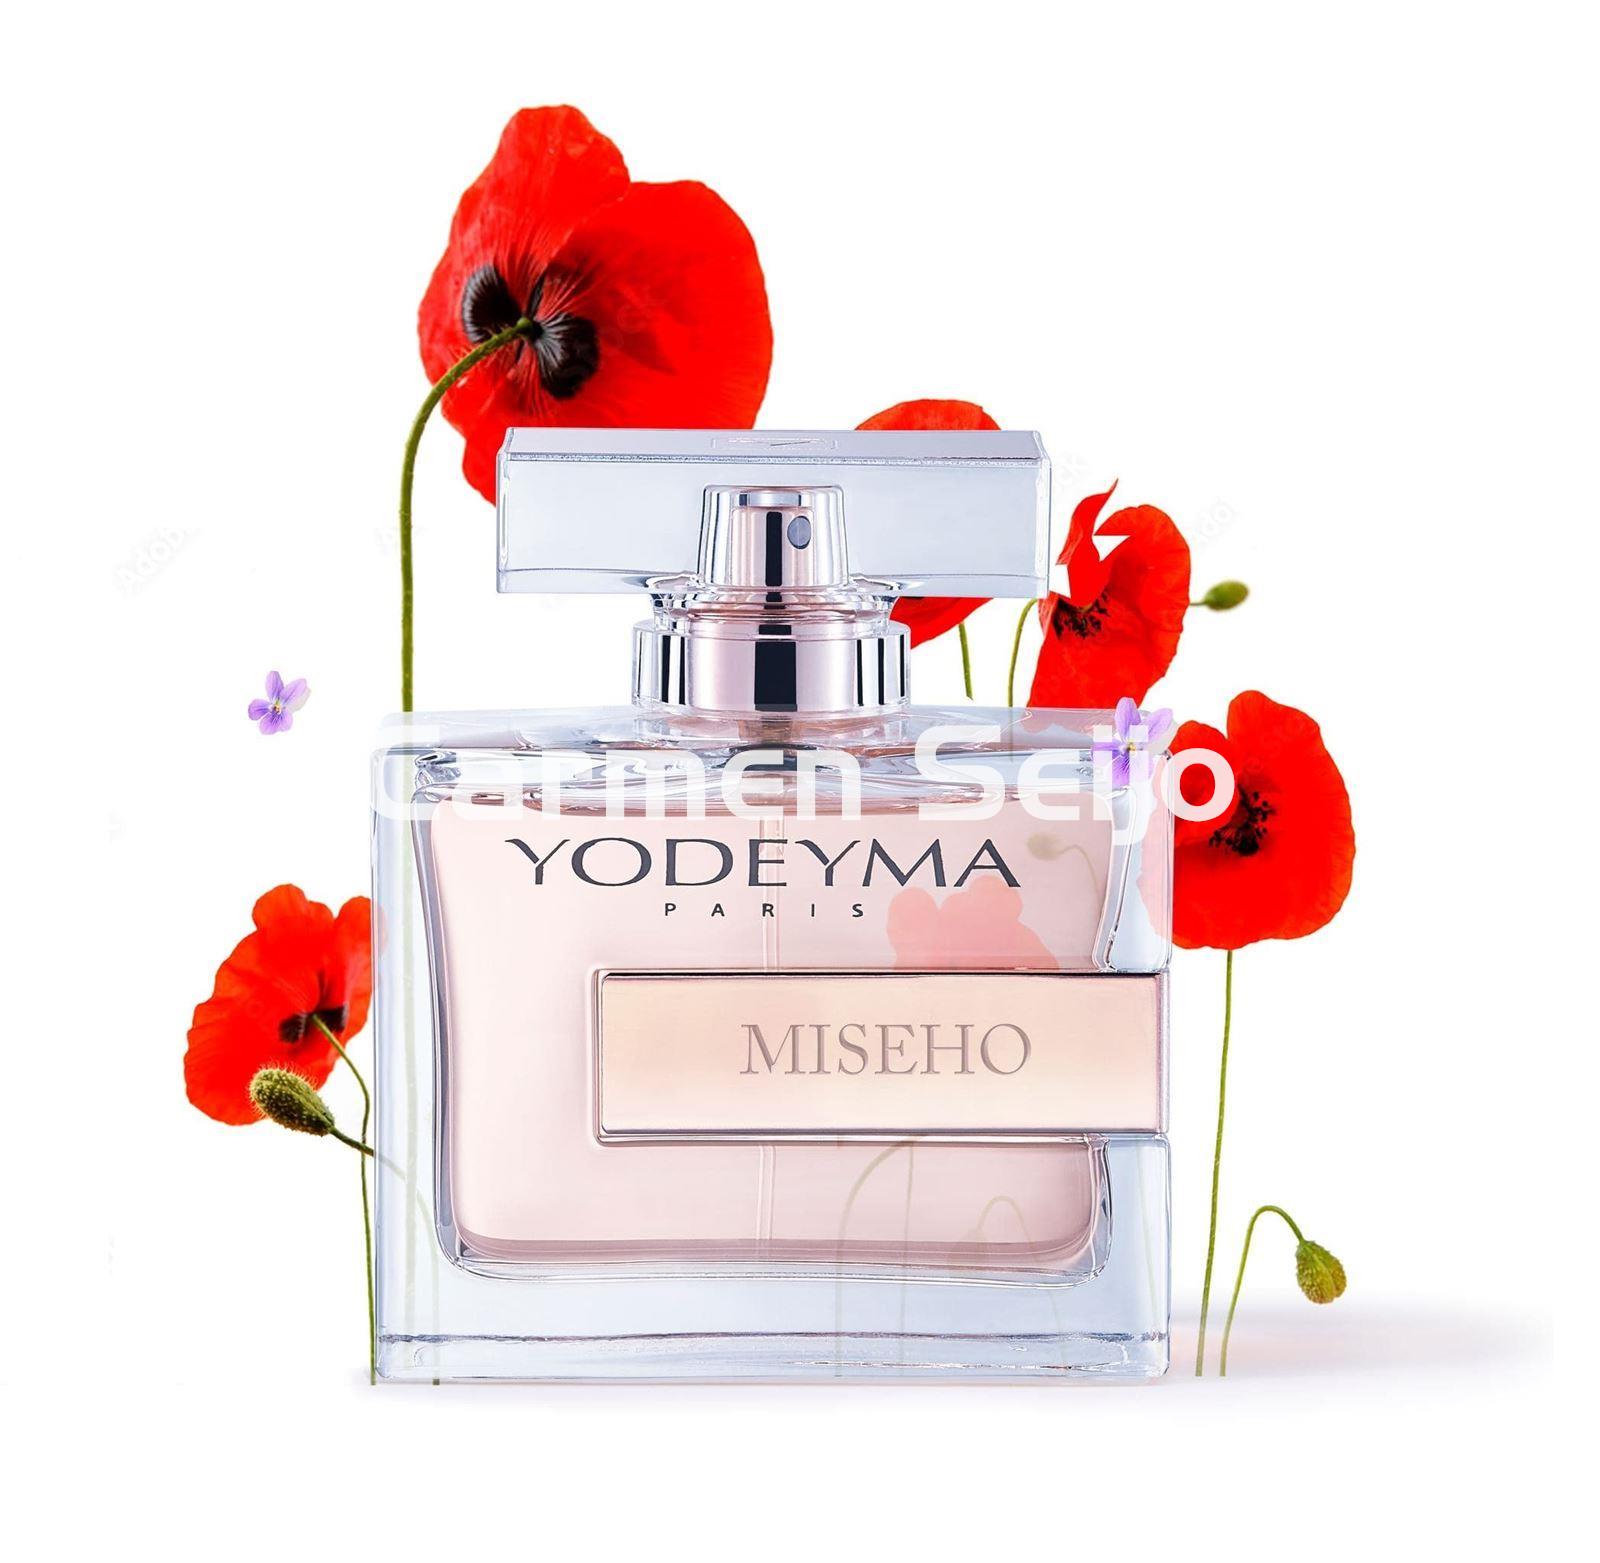 Yodeyma Mujer Agua de Perfume MISEHO 100 ml. - Imagen 1